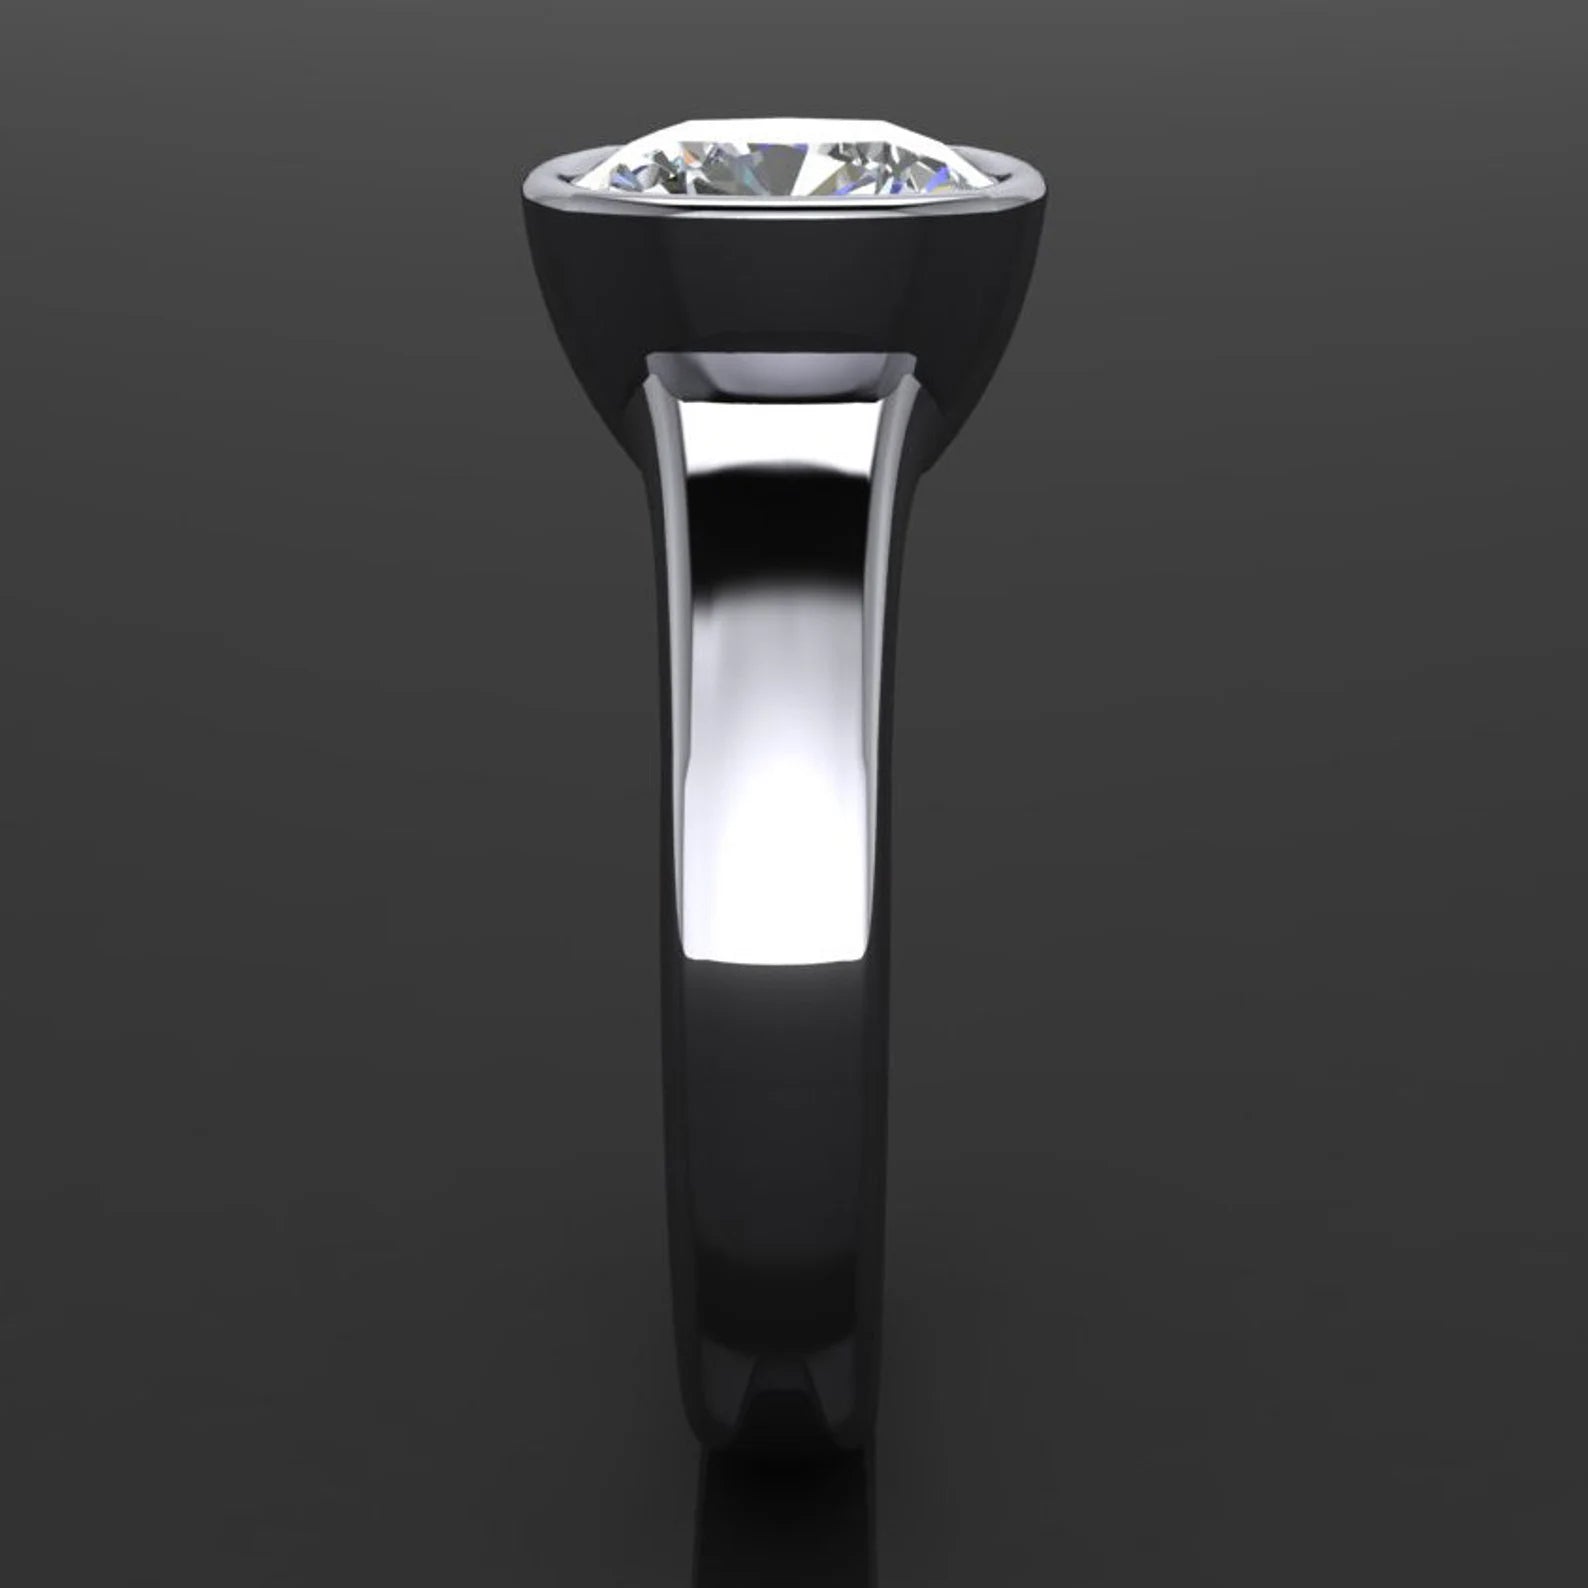 maddox ring – 3.3 carat cushion cut NEO moissanite engagement ring, bezel set engagement - J Hollywood Designs